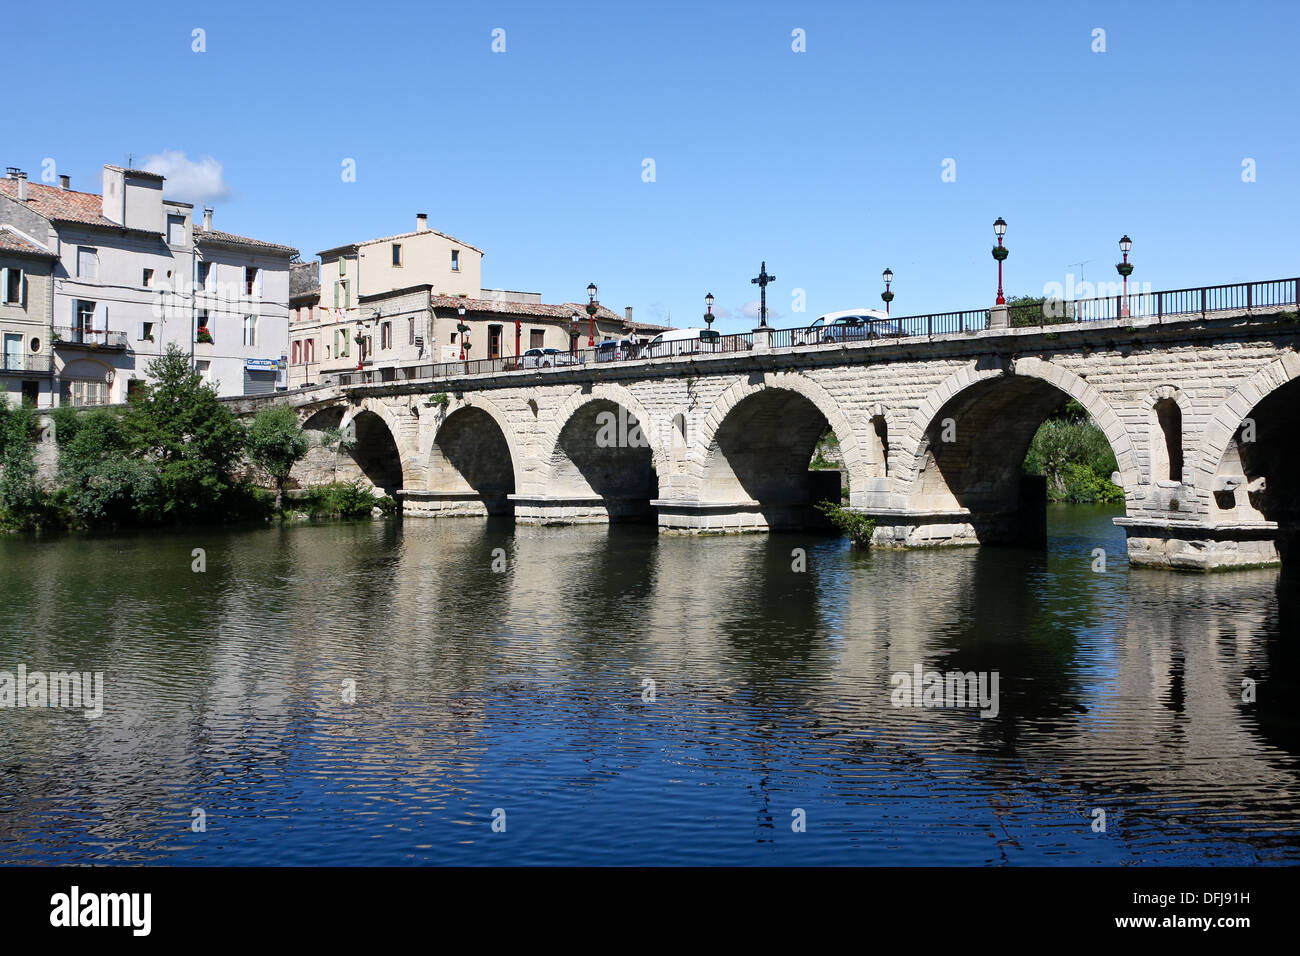 Roman bridge over the River Vidourle, Sommieres, France Stock Photo